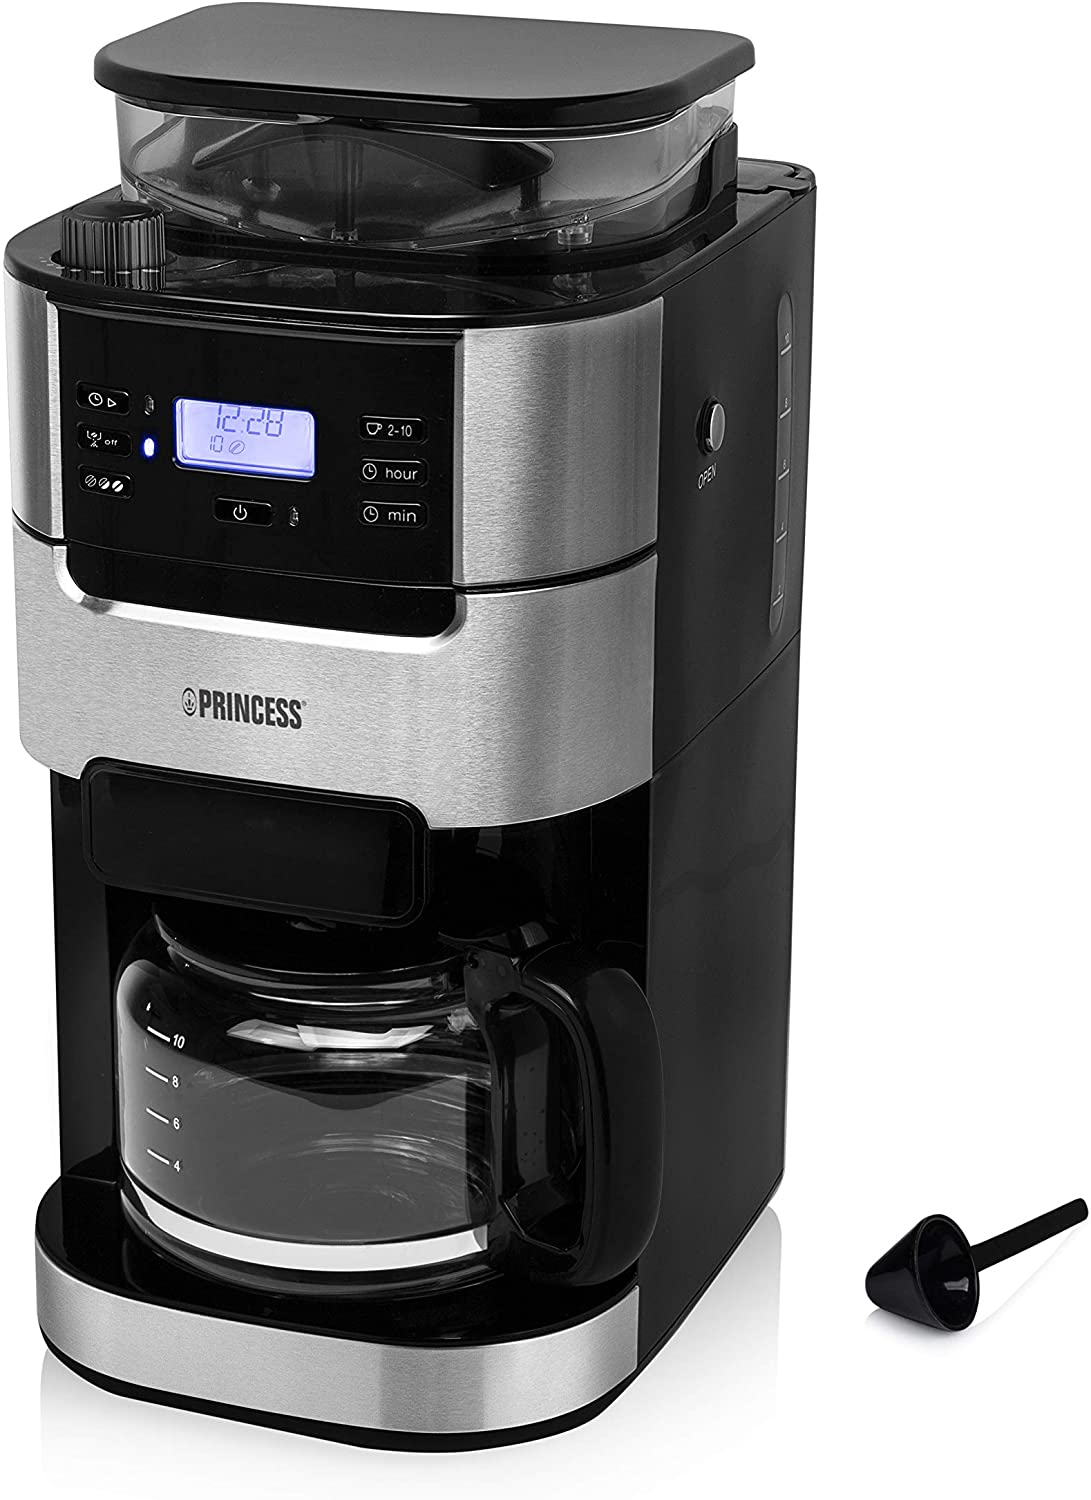 Princess 249411 Coffee Machine with Grinder, Adjustable Grind, Up to 10 Cup